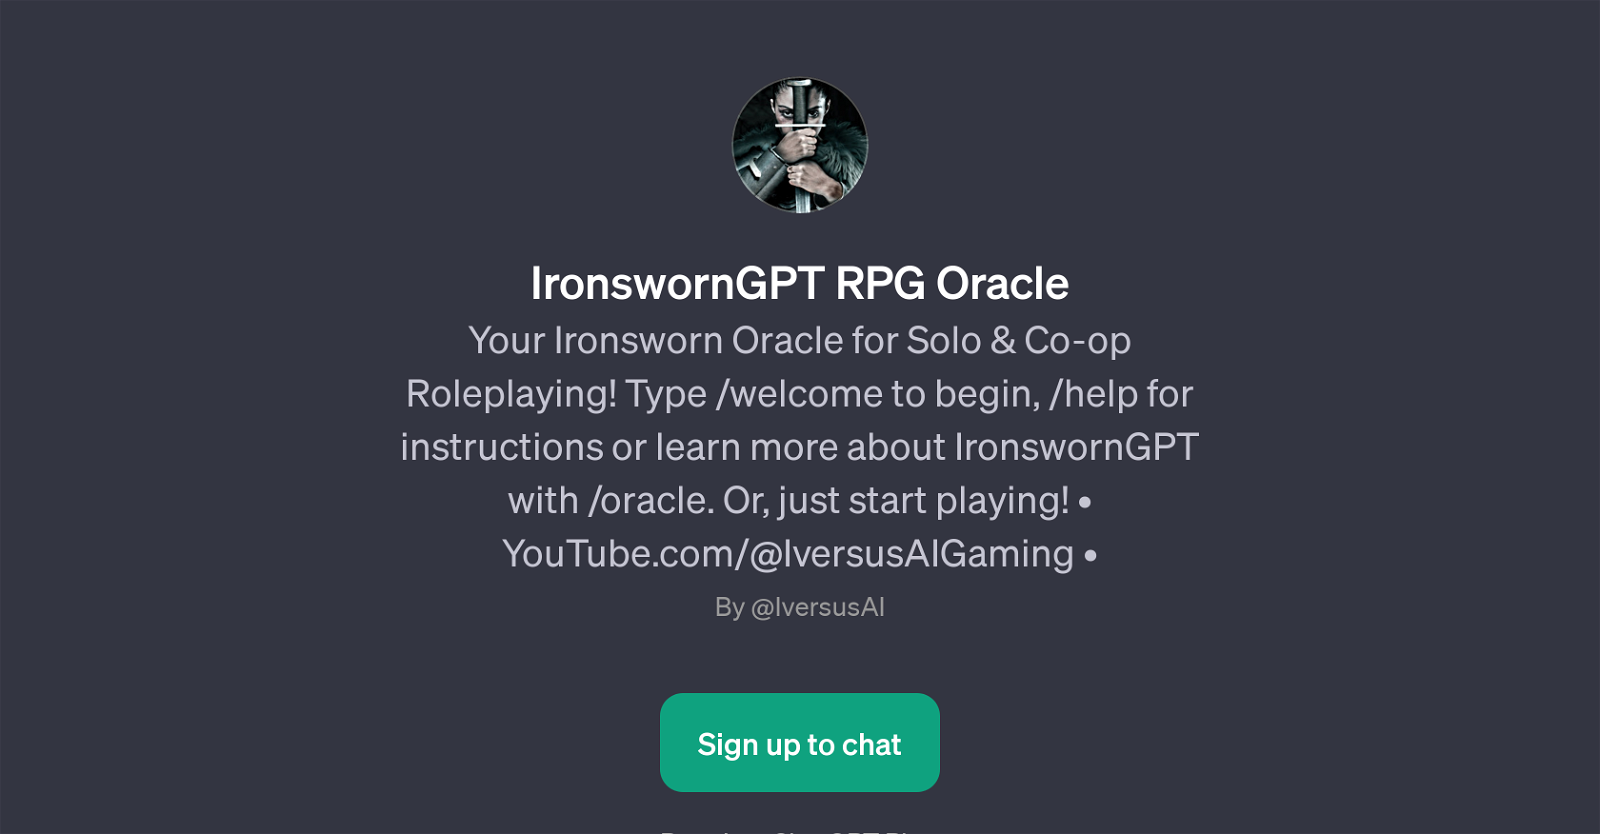 IronswornGPT RPG Oracle website